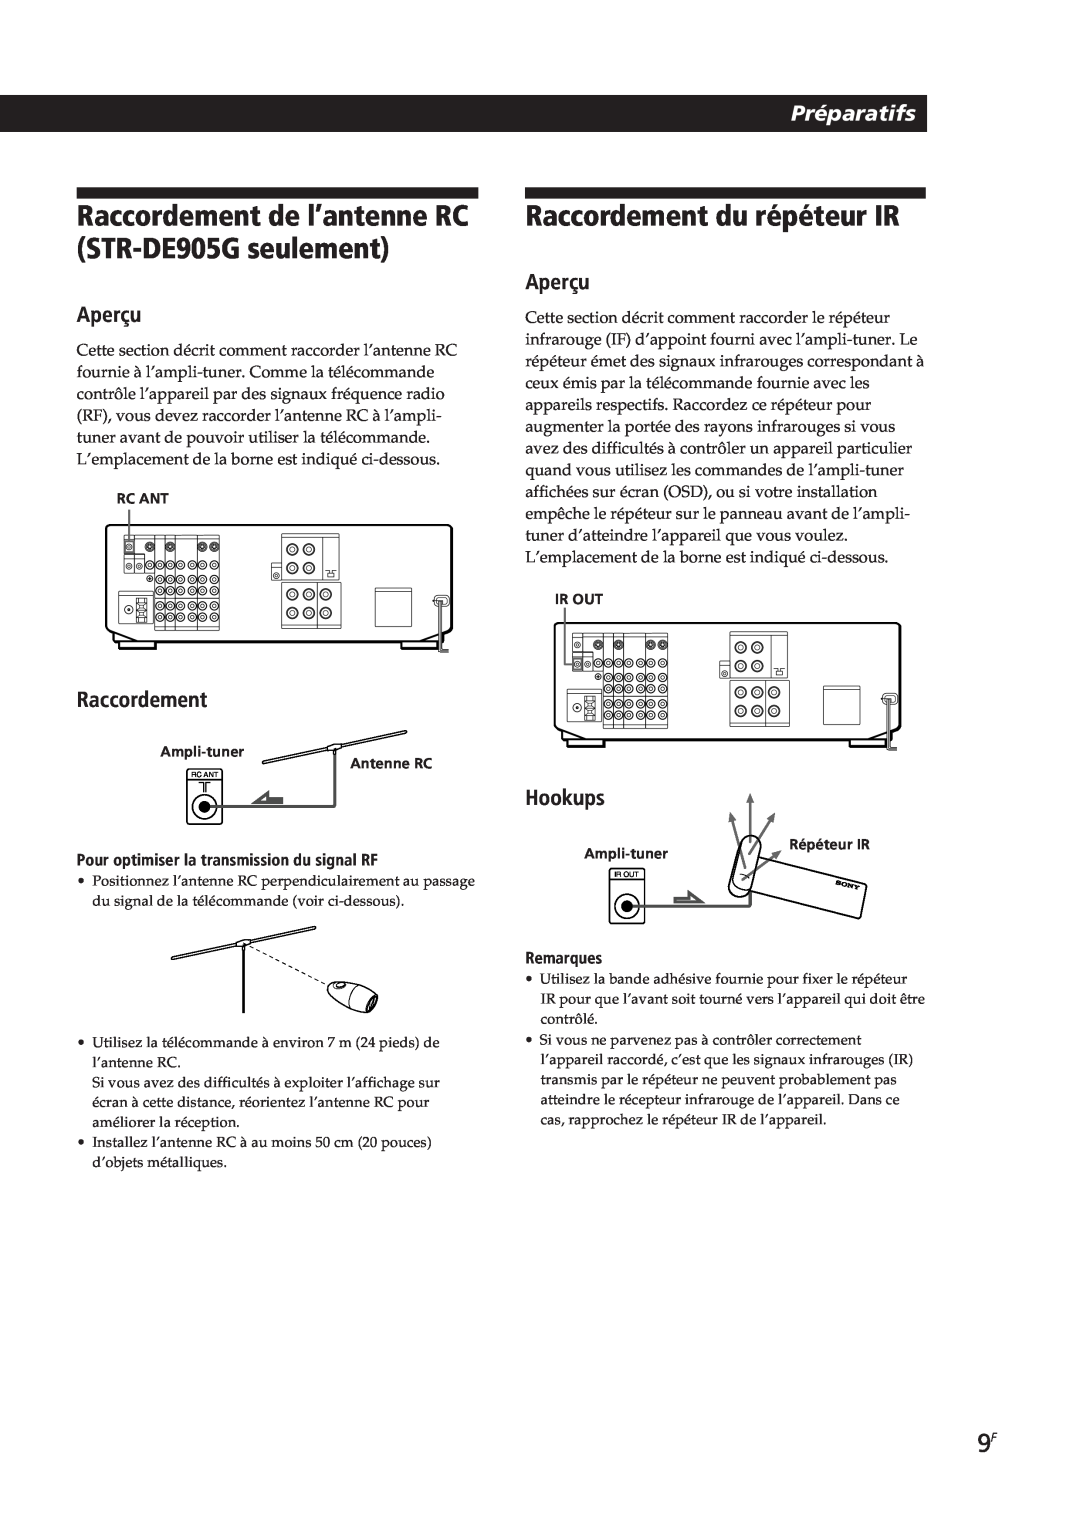 Sony STR-DE805G manual Raccordement de l’antenne RC STR-DE905Gseulement, Raccordement du répéteur IR, Préparatifs, Aperçu 